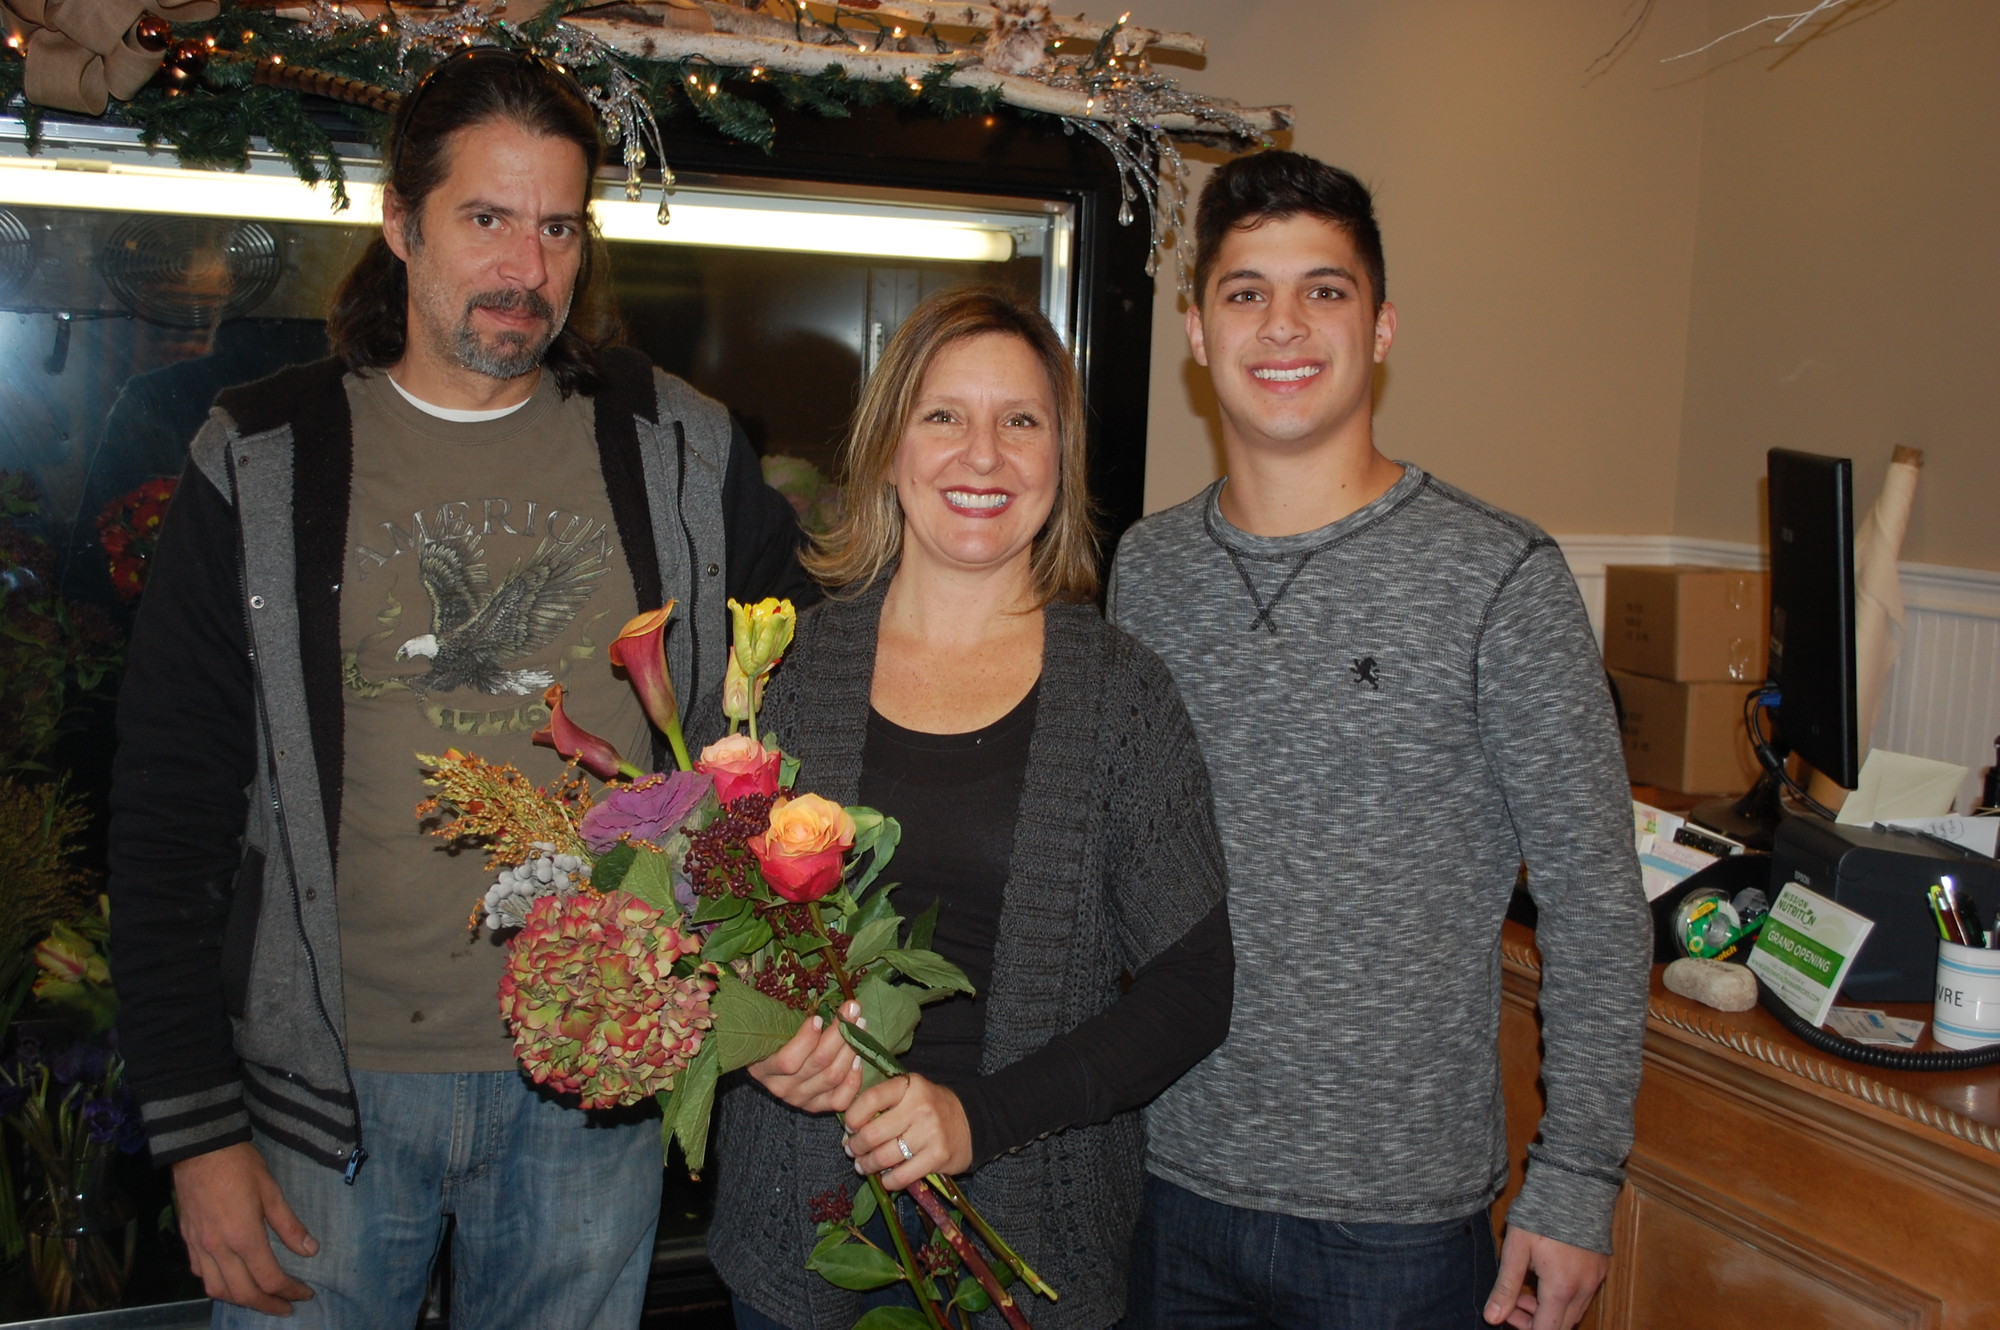 Floral designer Scott Reichle, left, is joined by Laura and Jake LaMontonaro who own the Flower Barn on Alken Avenue.